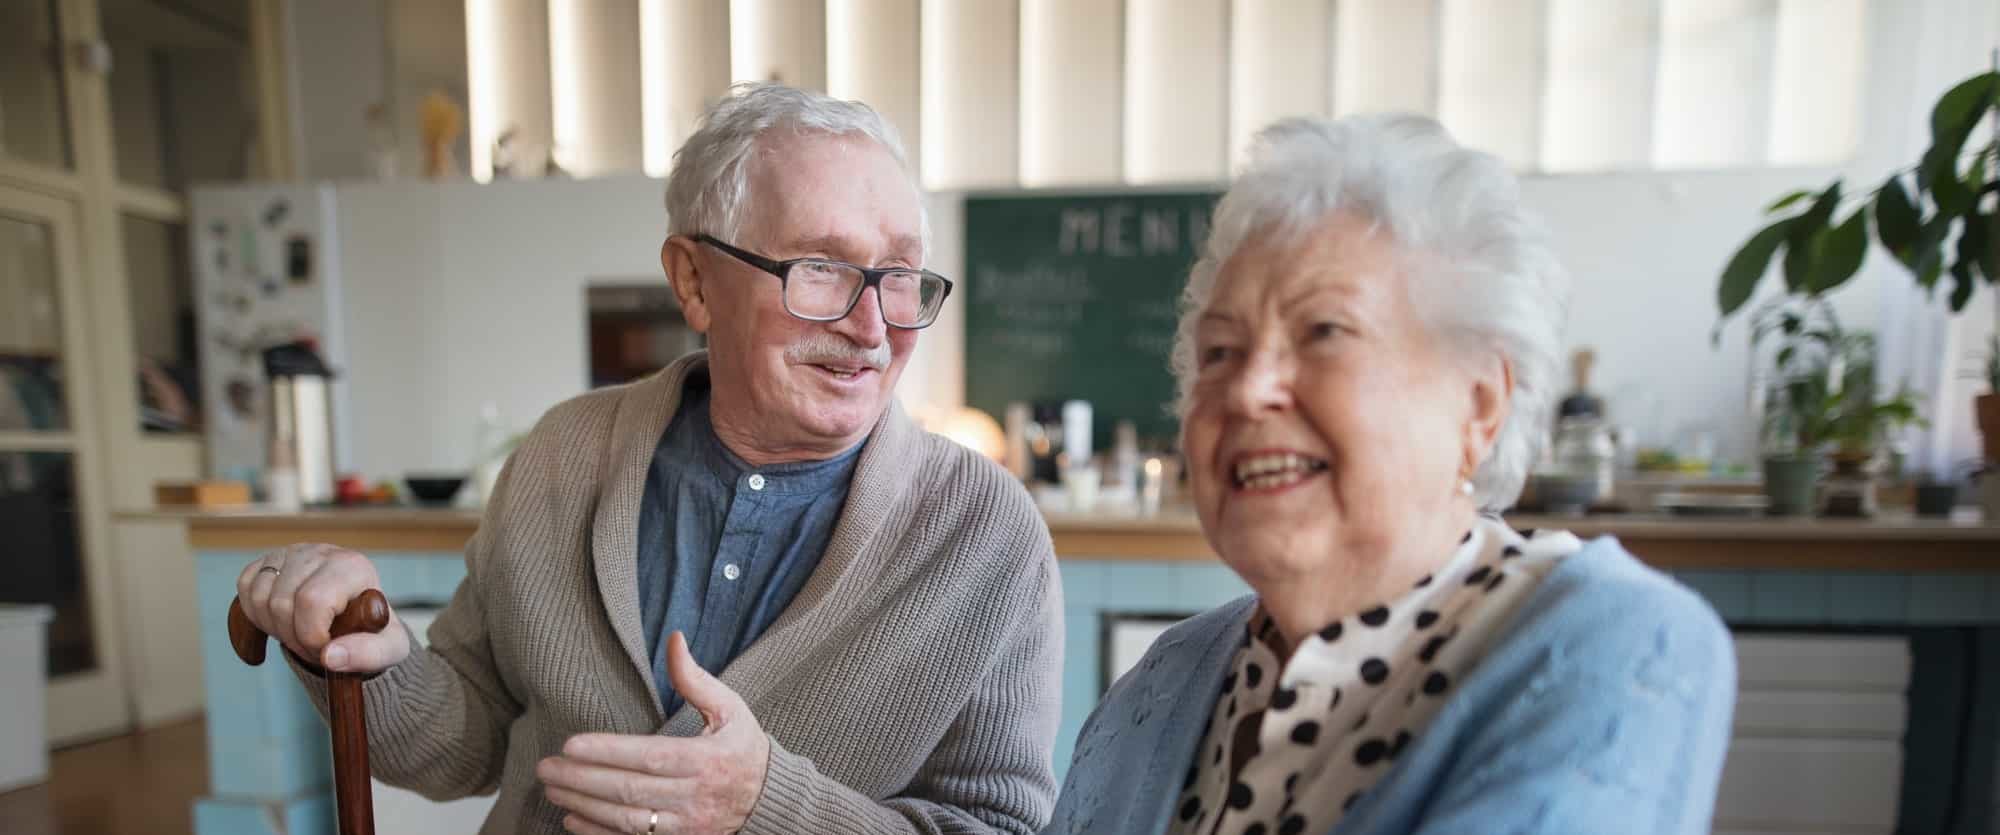 Smiling elderly woman and man enjoying breakfast in nursing home care center